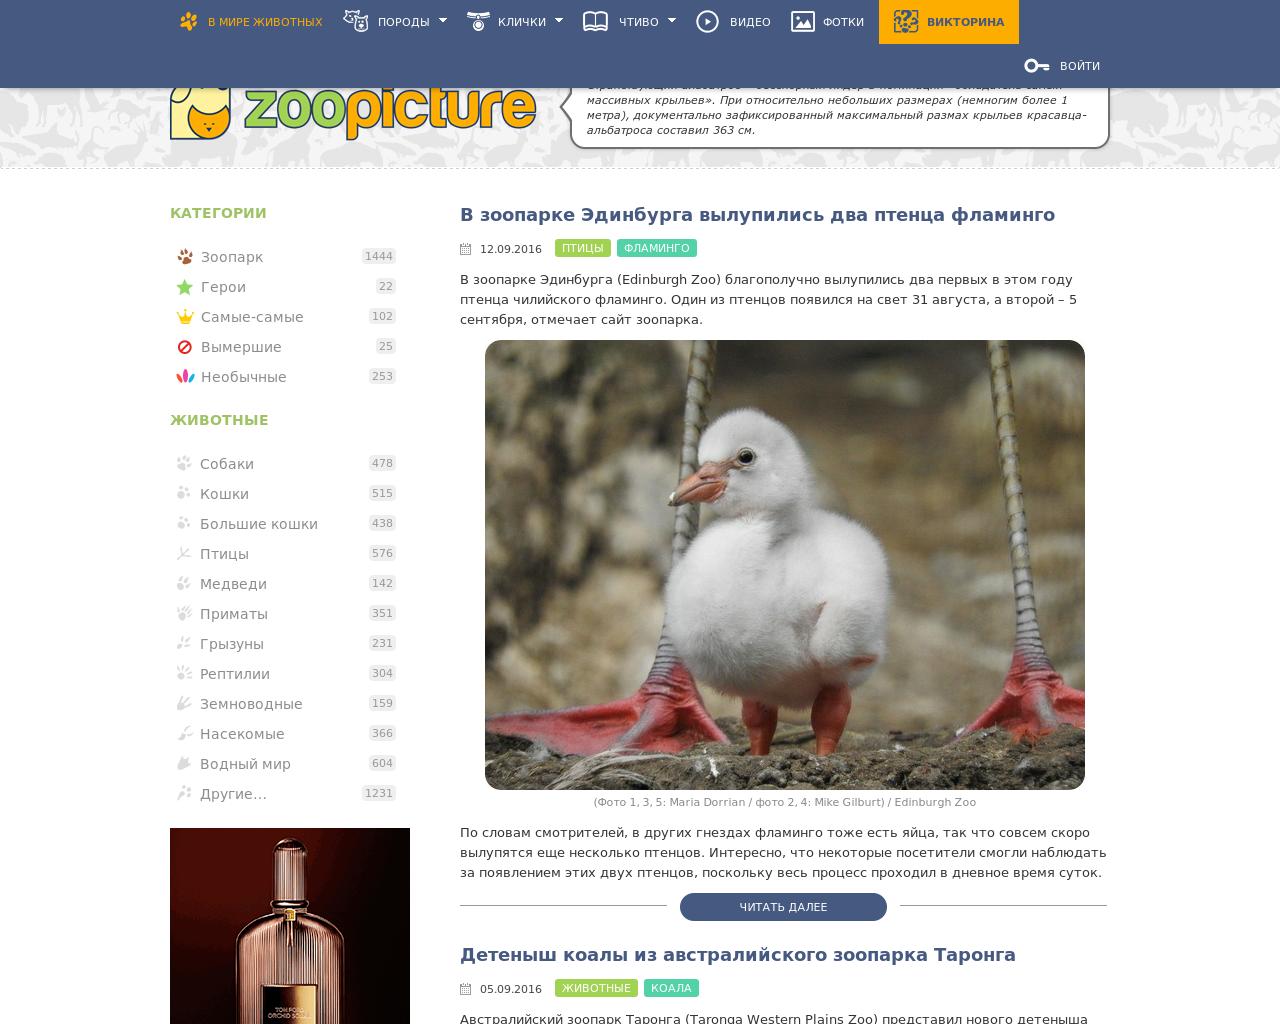 Изображение сайта zoopicture.ru в разрешении 1280x1024